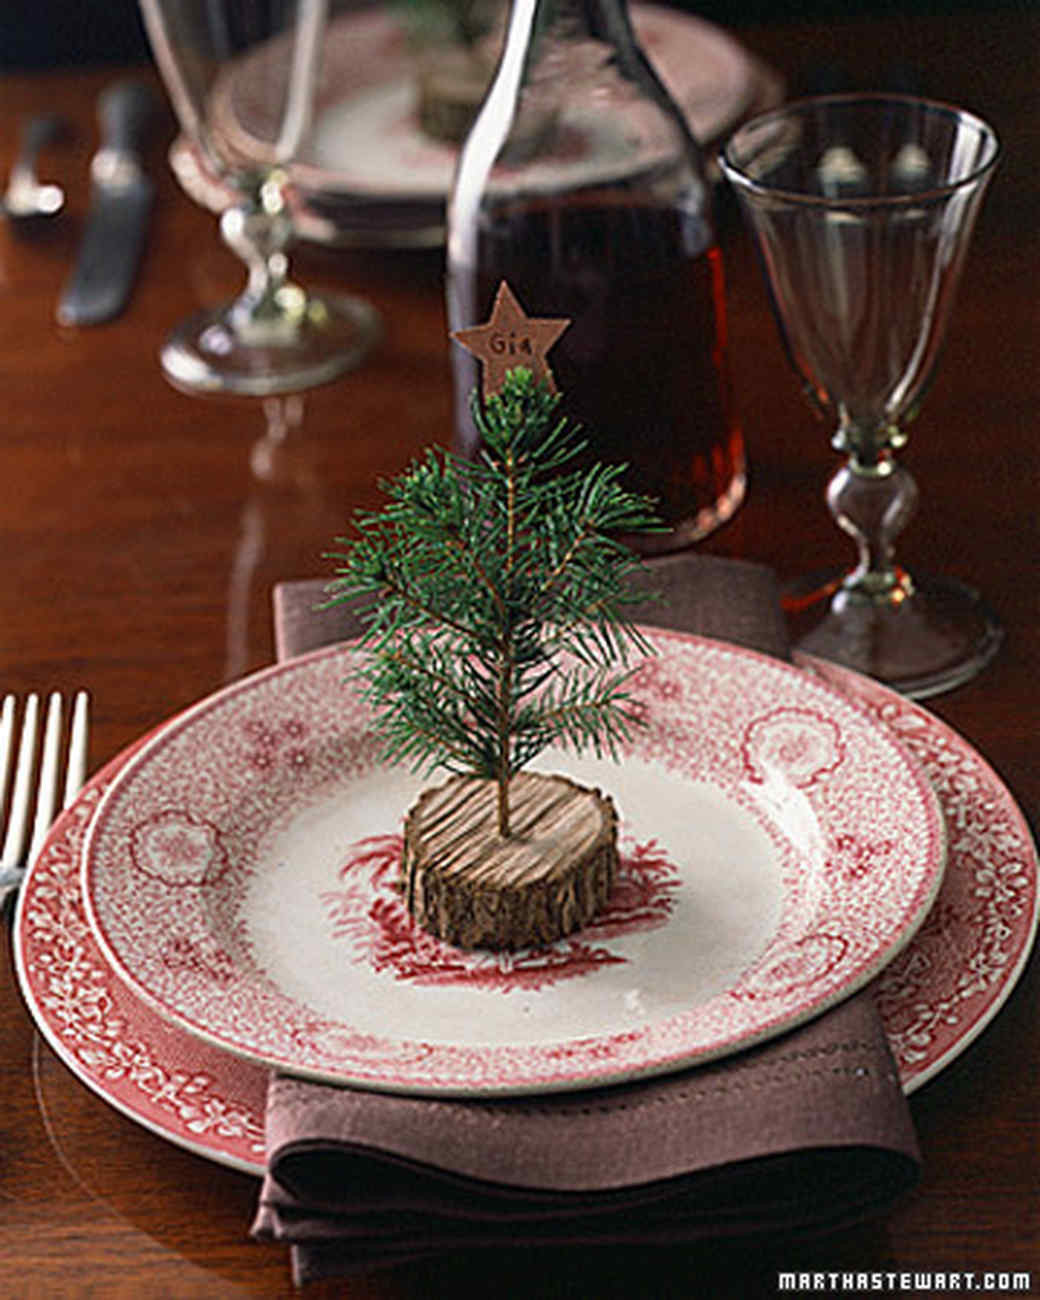 Homemade Christmas Decoration Ideas
 The Best Handmade Christmas Decorations